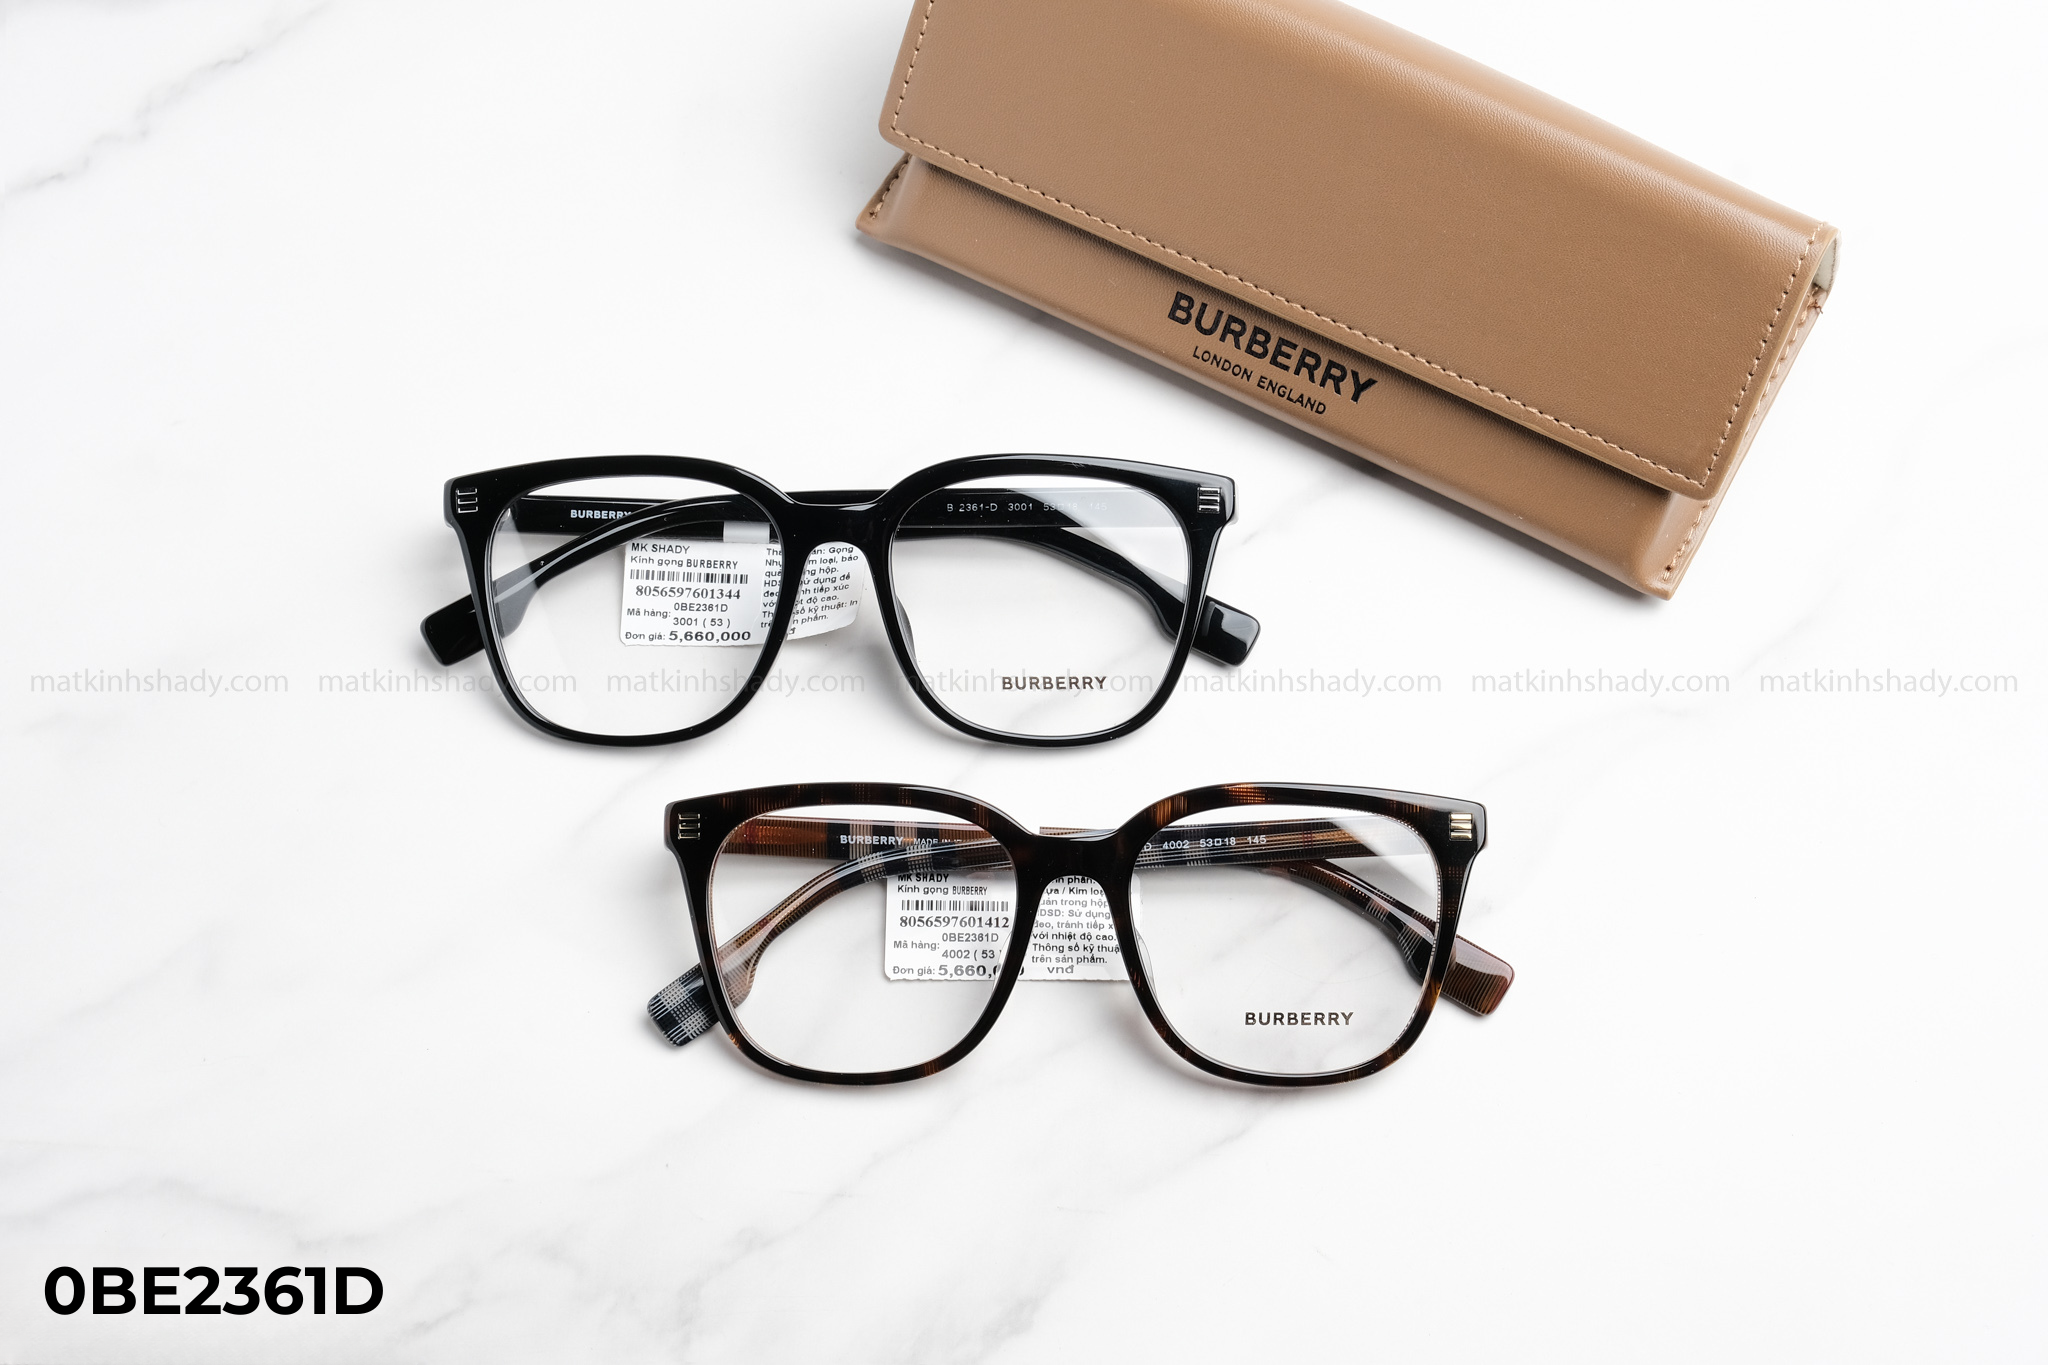  Burberry Eyewear - Glasses - OBE2361D 